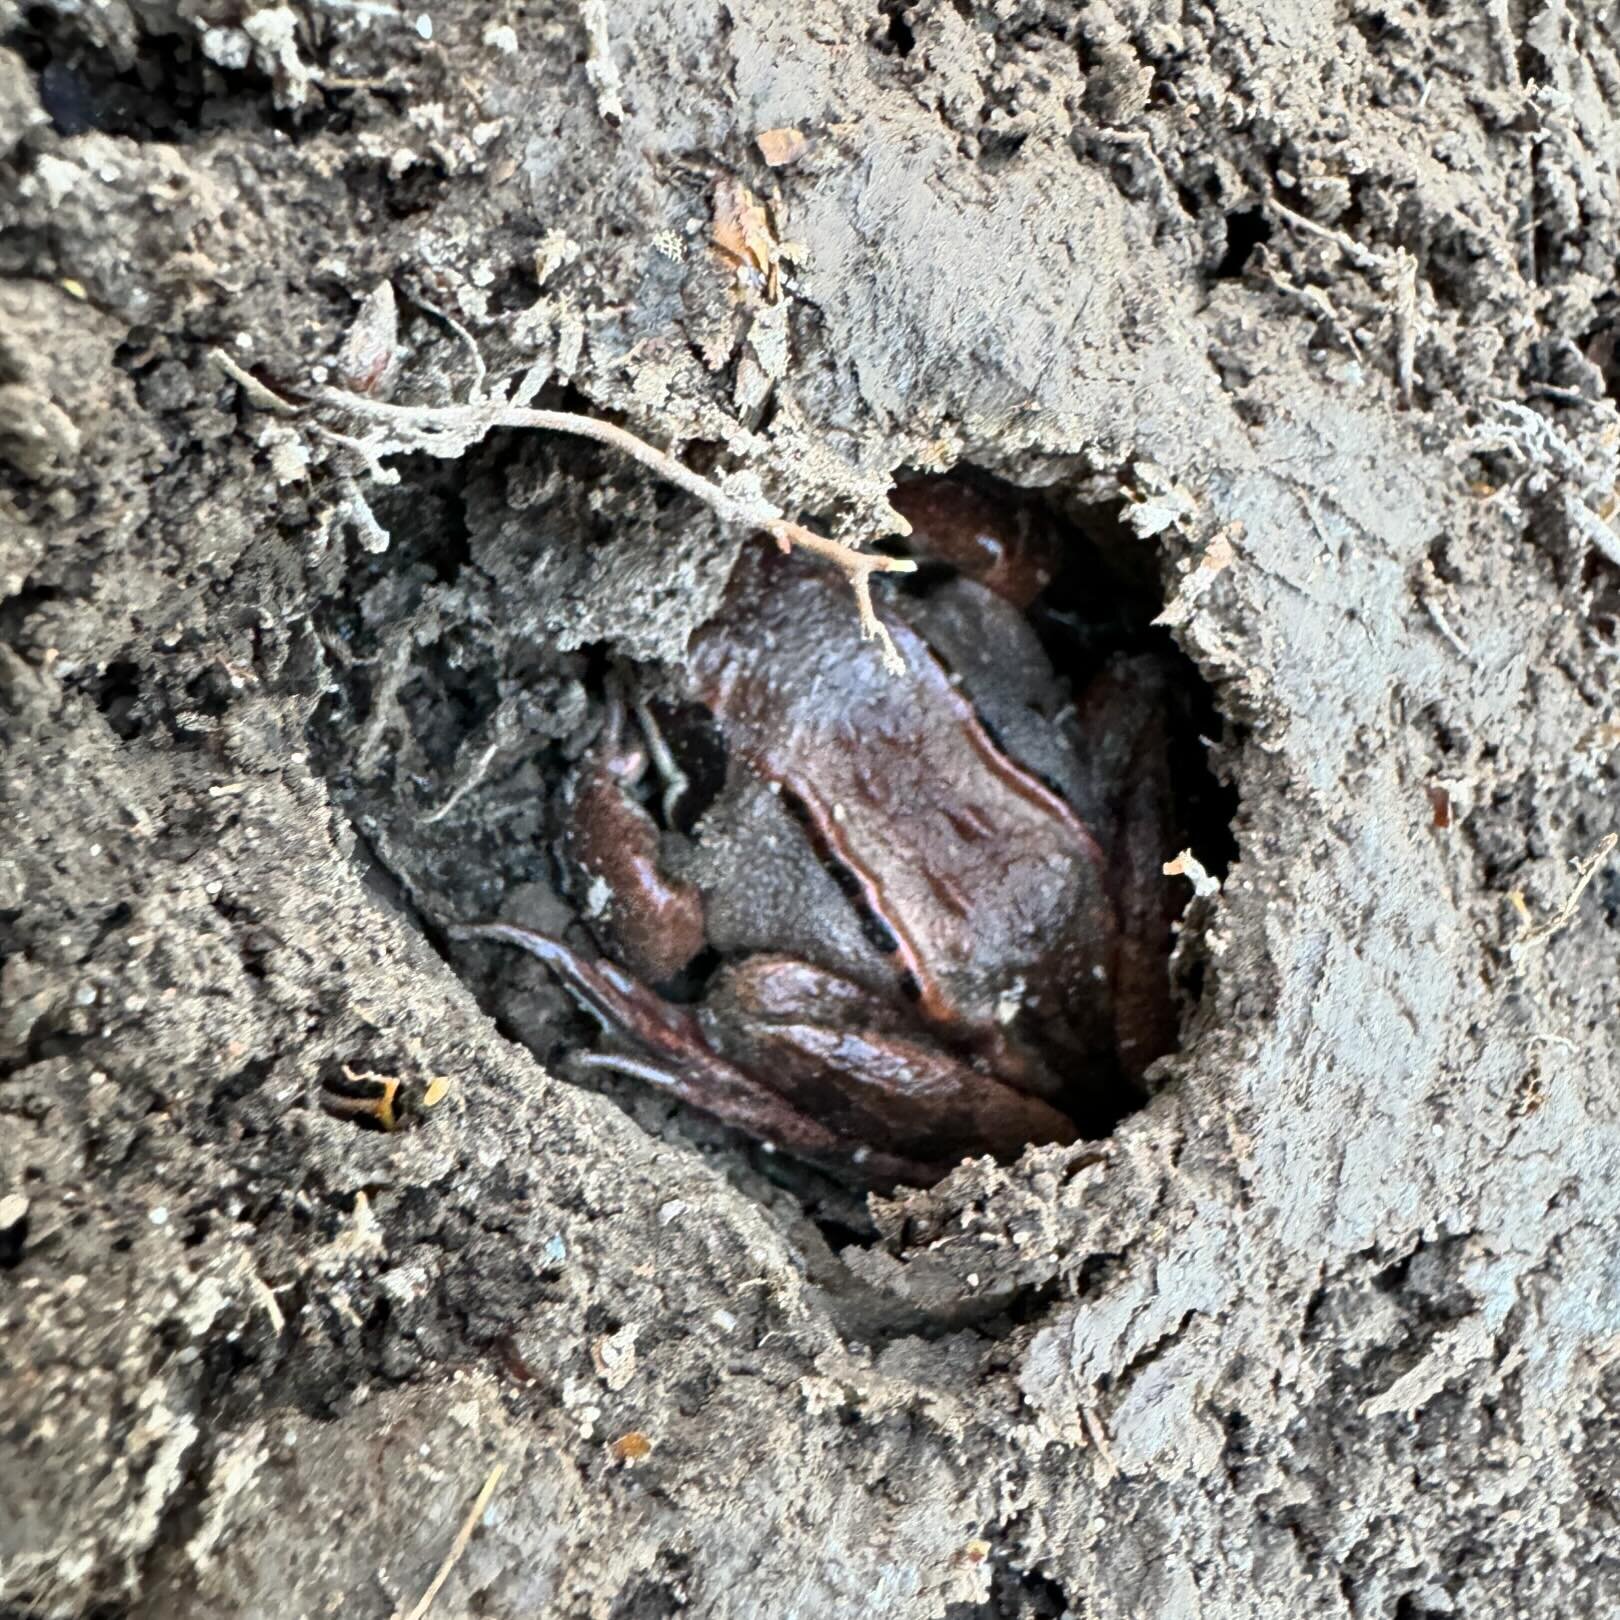 Hello my friend. I hope your winter slumber was wonderful. 

#woodfrog
#herpetology 
#hibernation
#anura
#spring